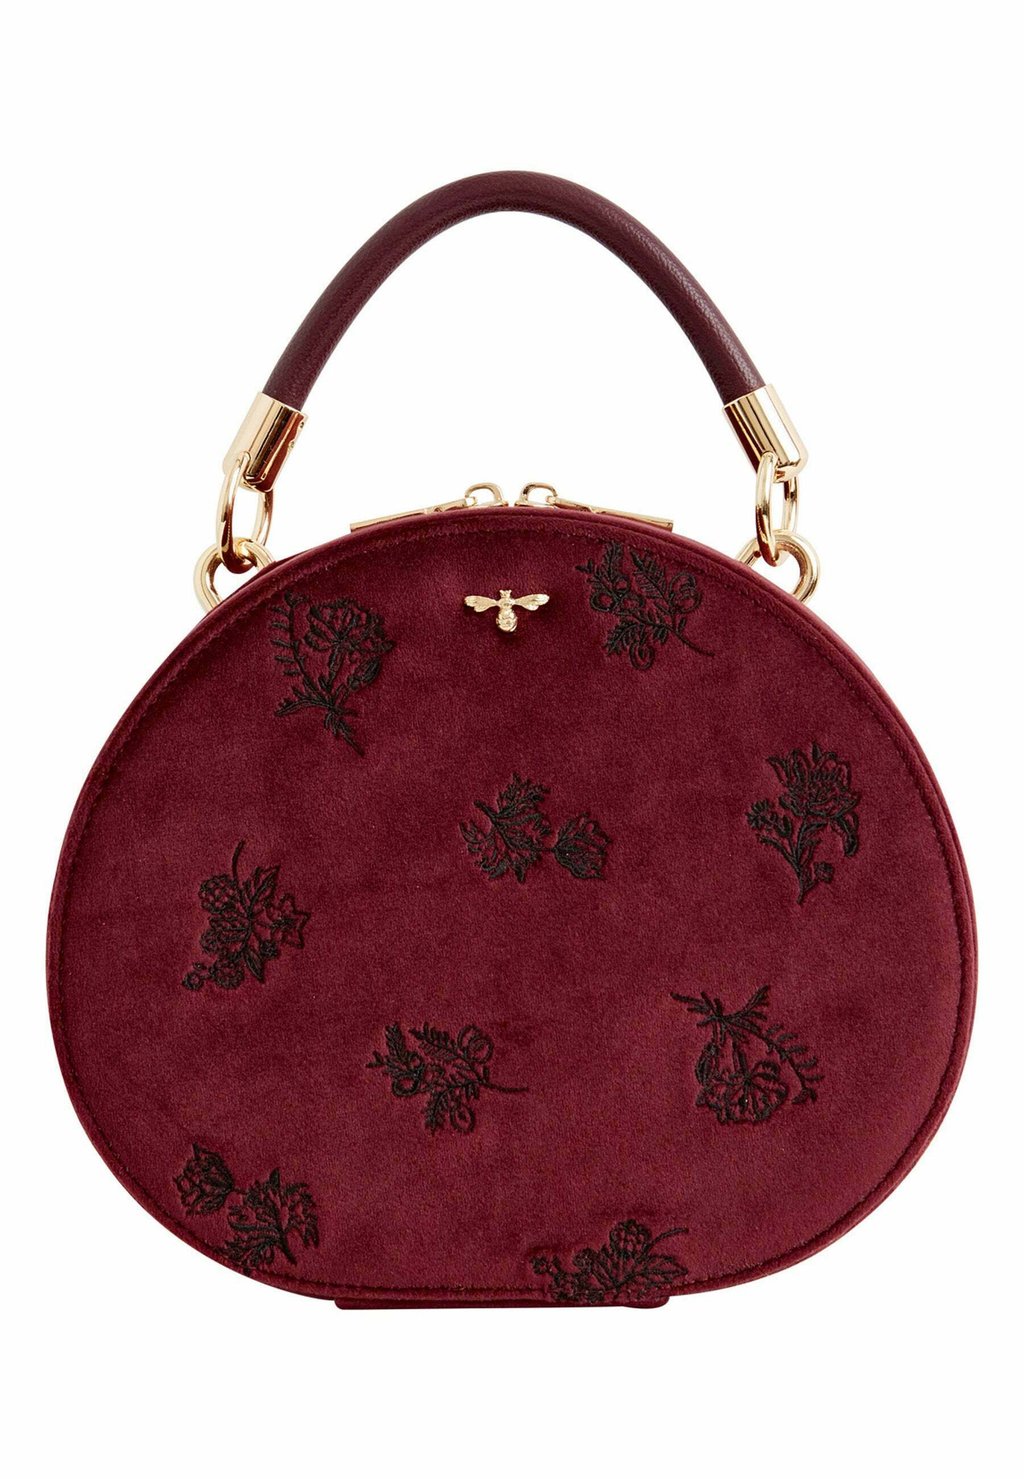 Косметичка Flora Embroidered Vanity Redcurrant FABLE ENGLAND, красный сумка fox mushroom embroidered saddle redcurrant fable england цвет red